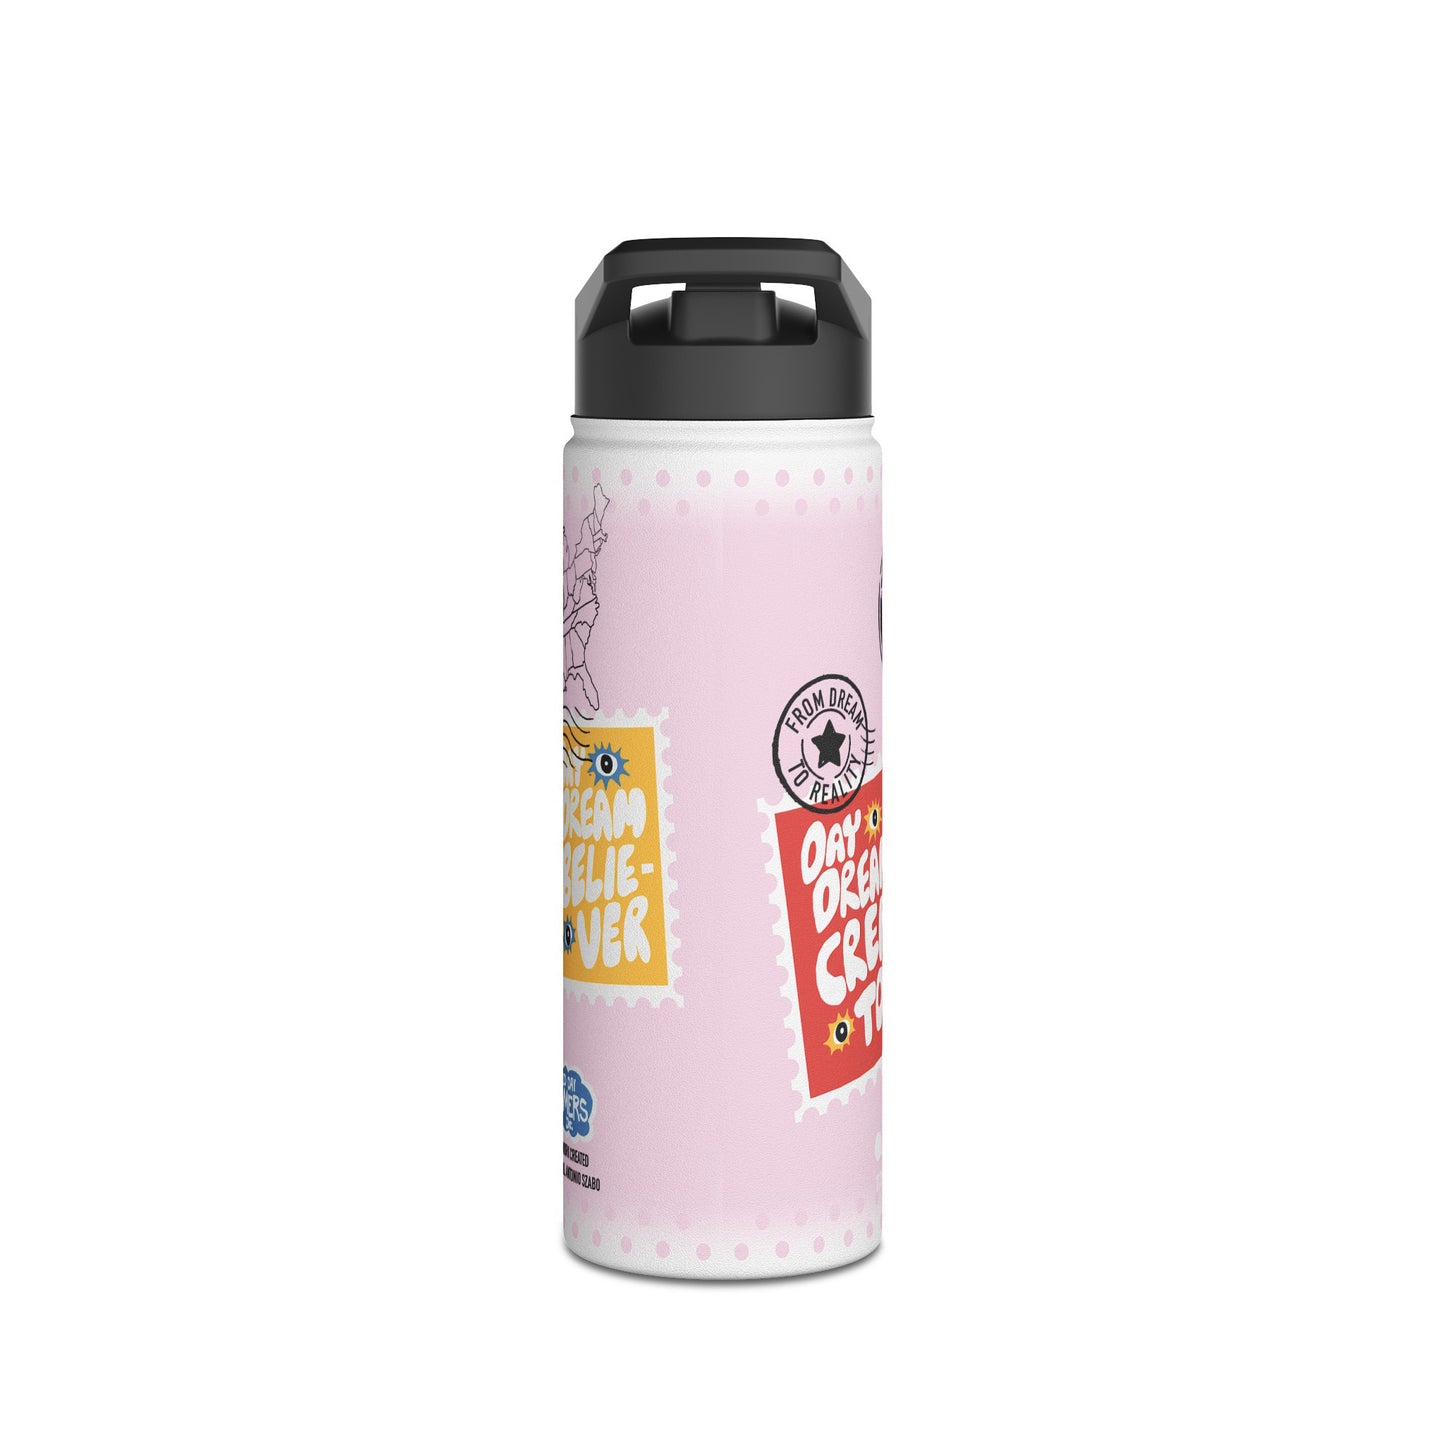 Travel Edition Premium 18oz  Water Bottle in Pink